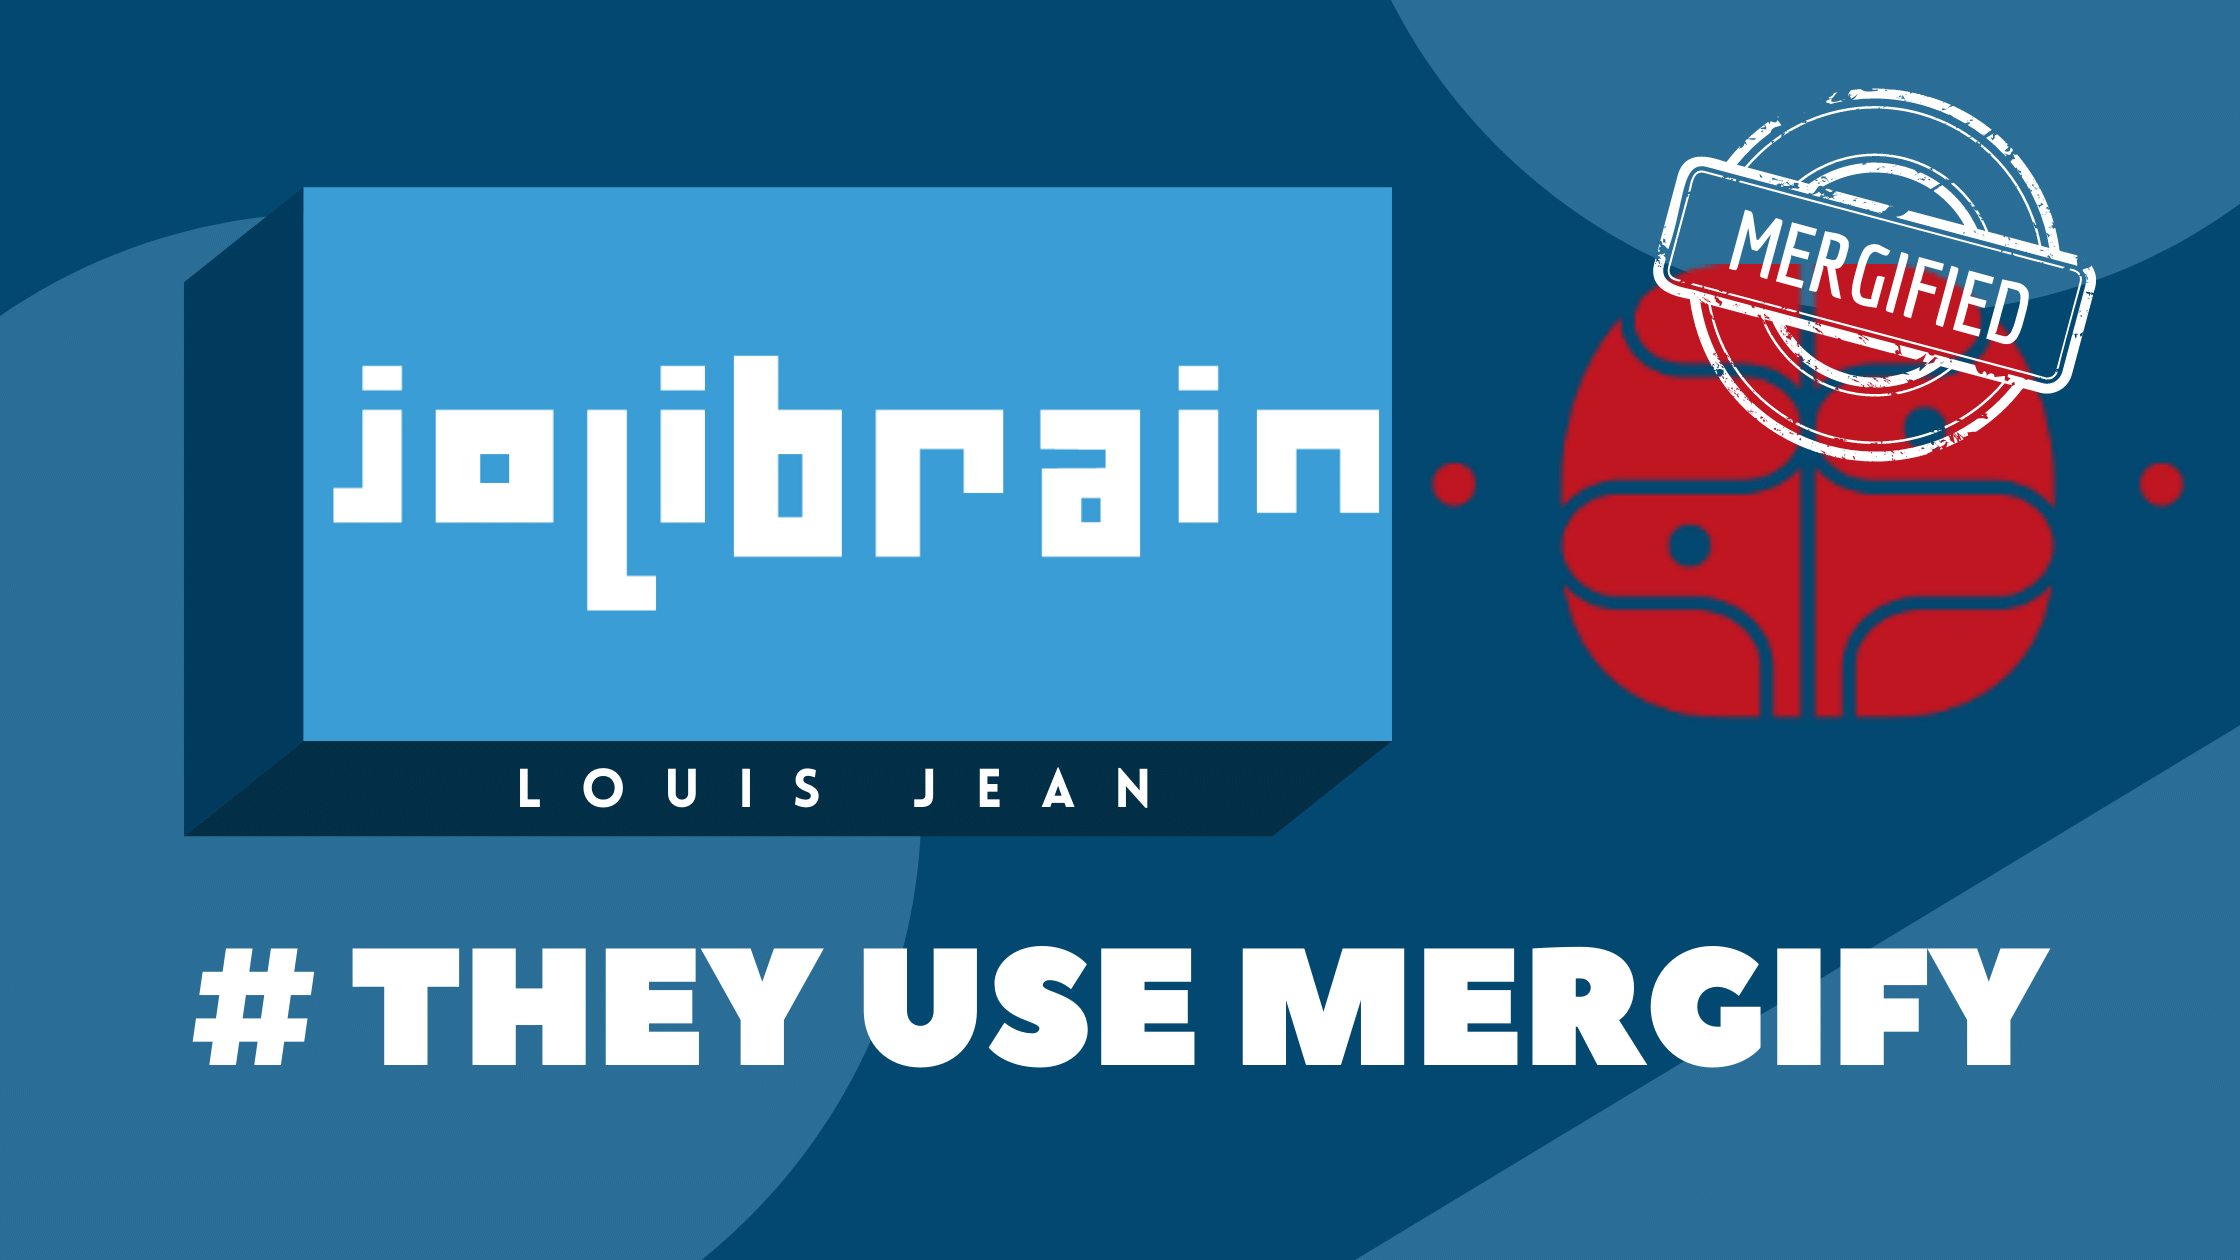 They use Mergify: JoliBrain